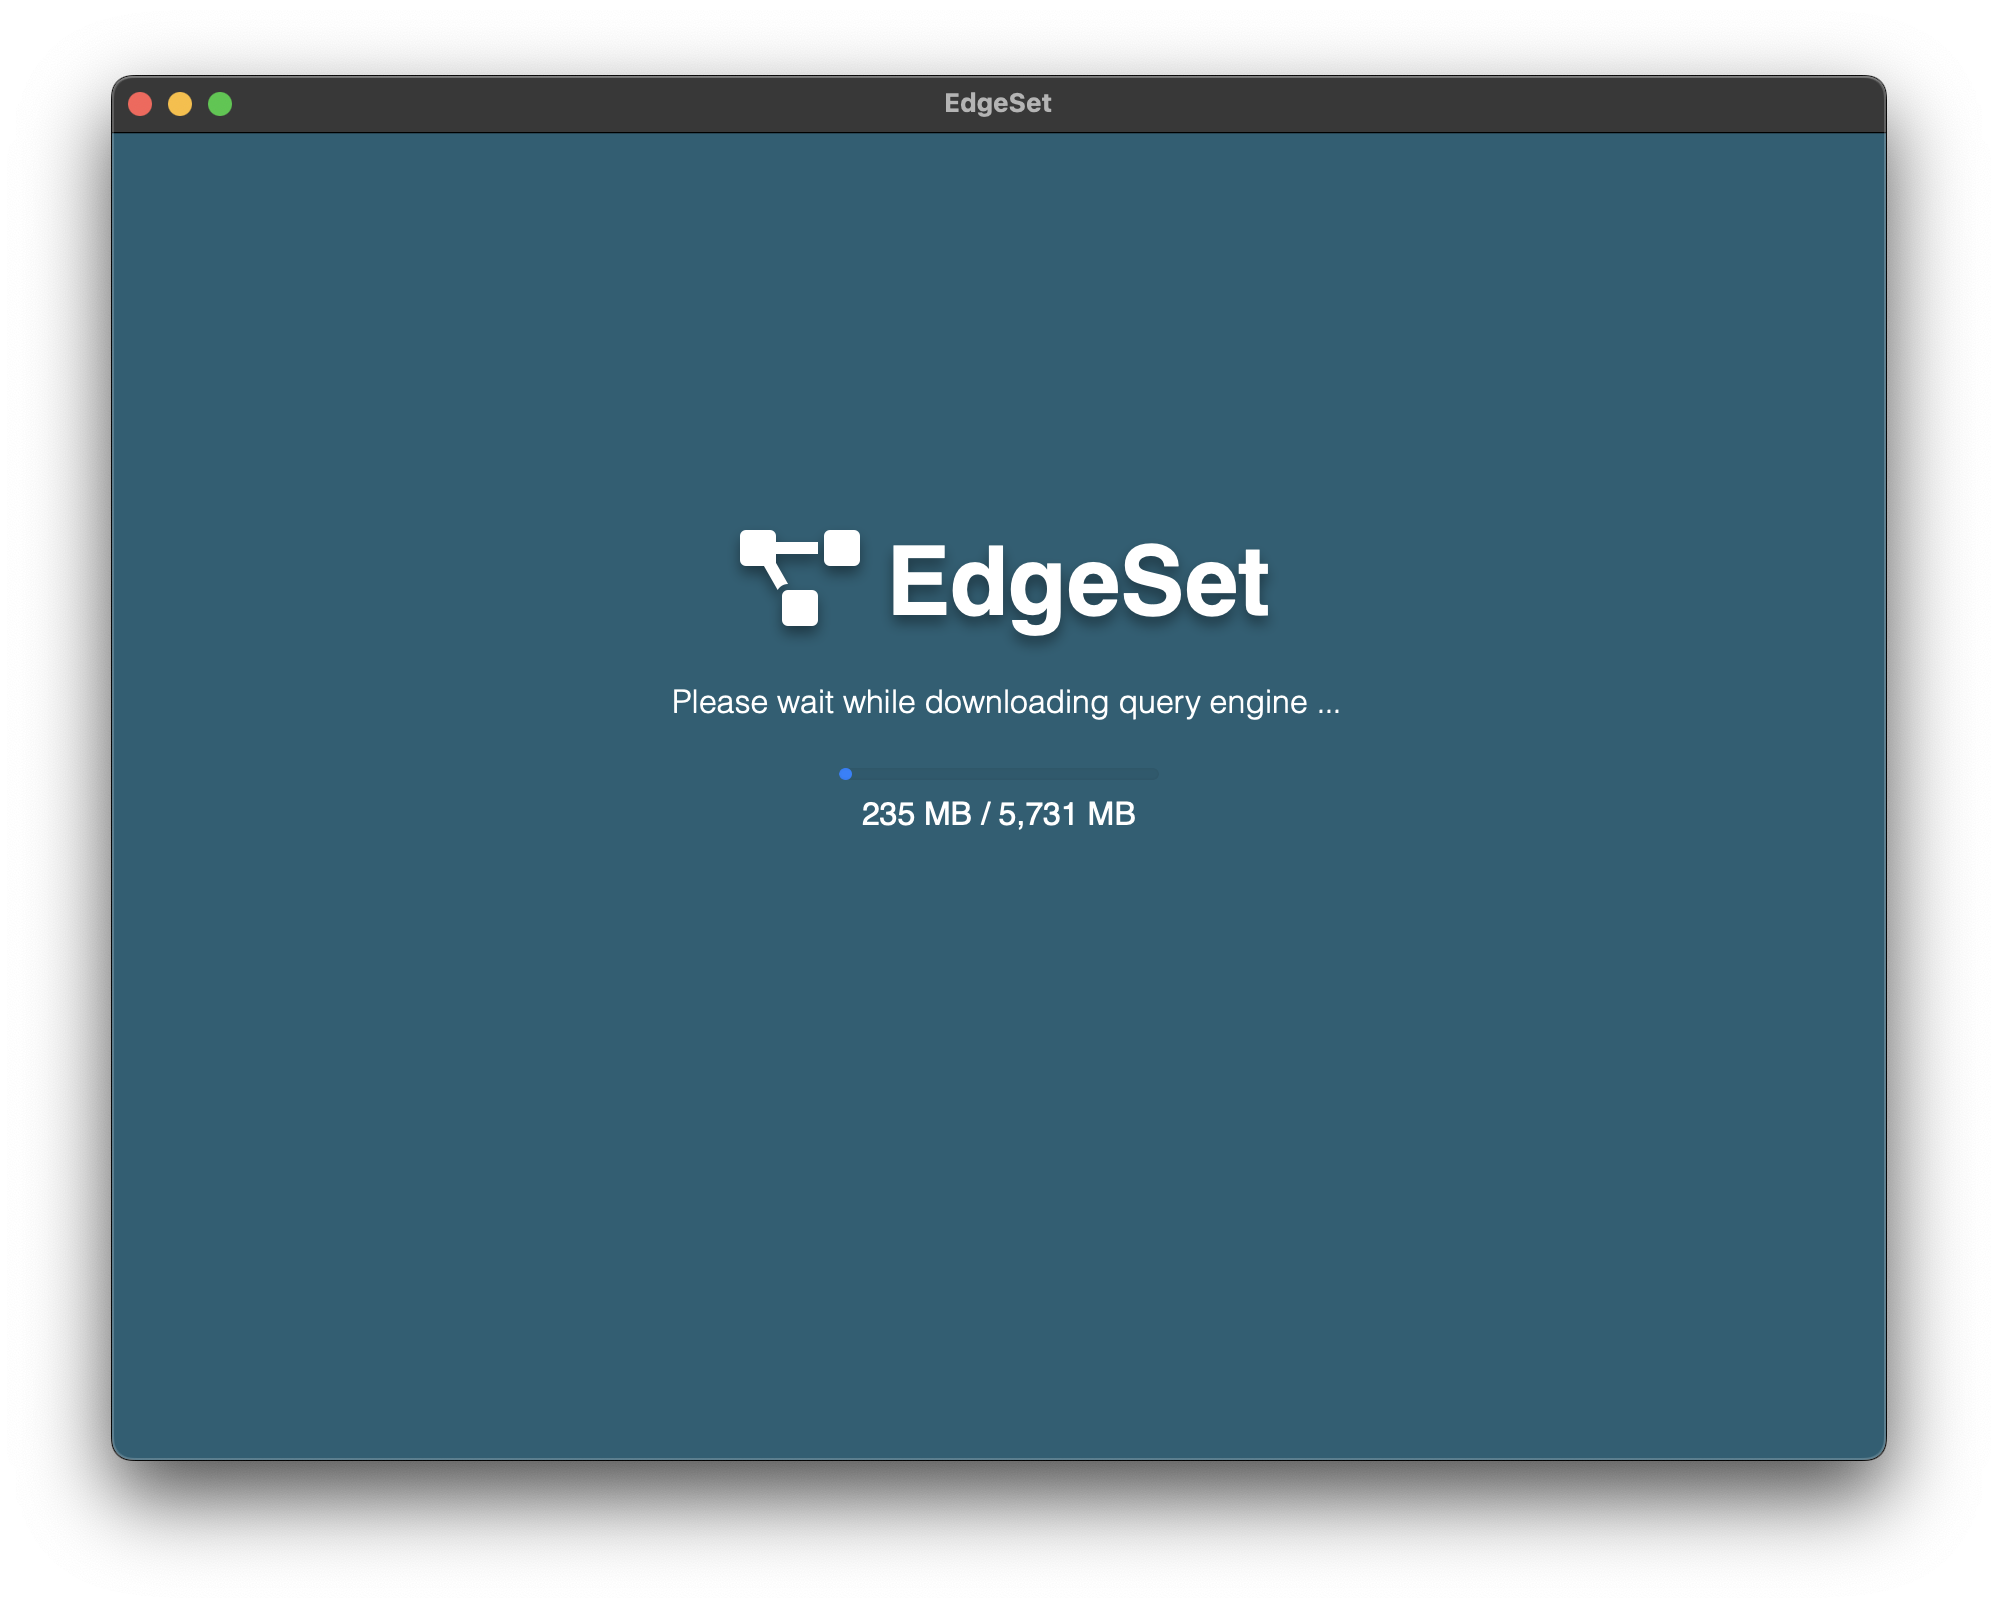 EdgeSet query engine download progress